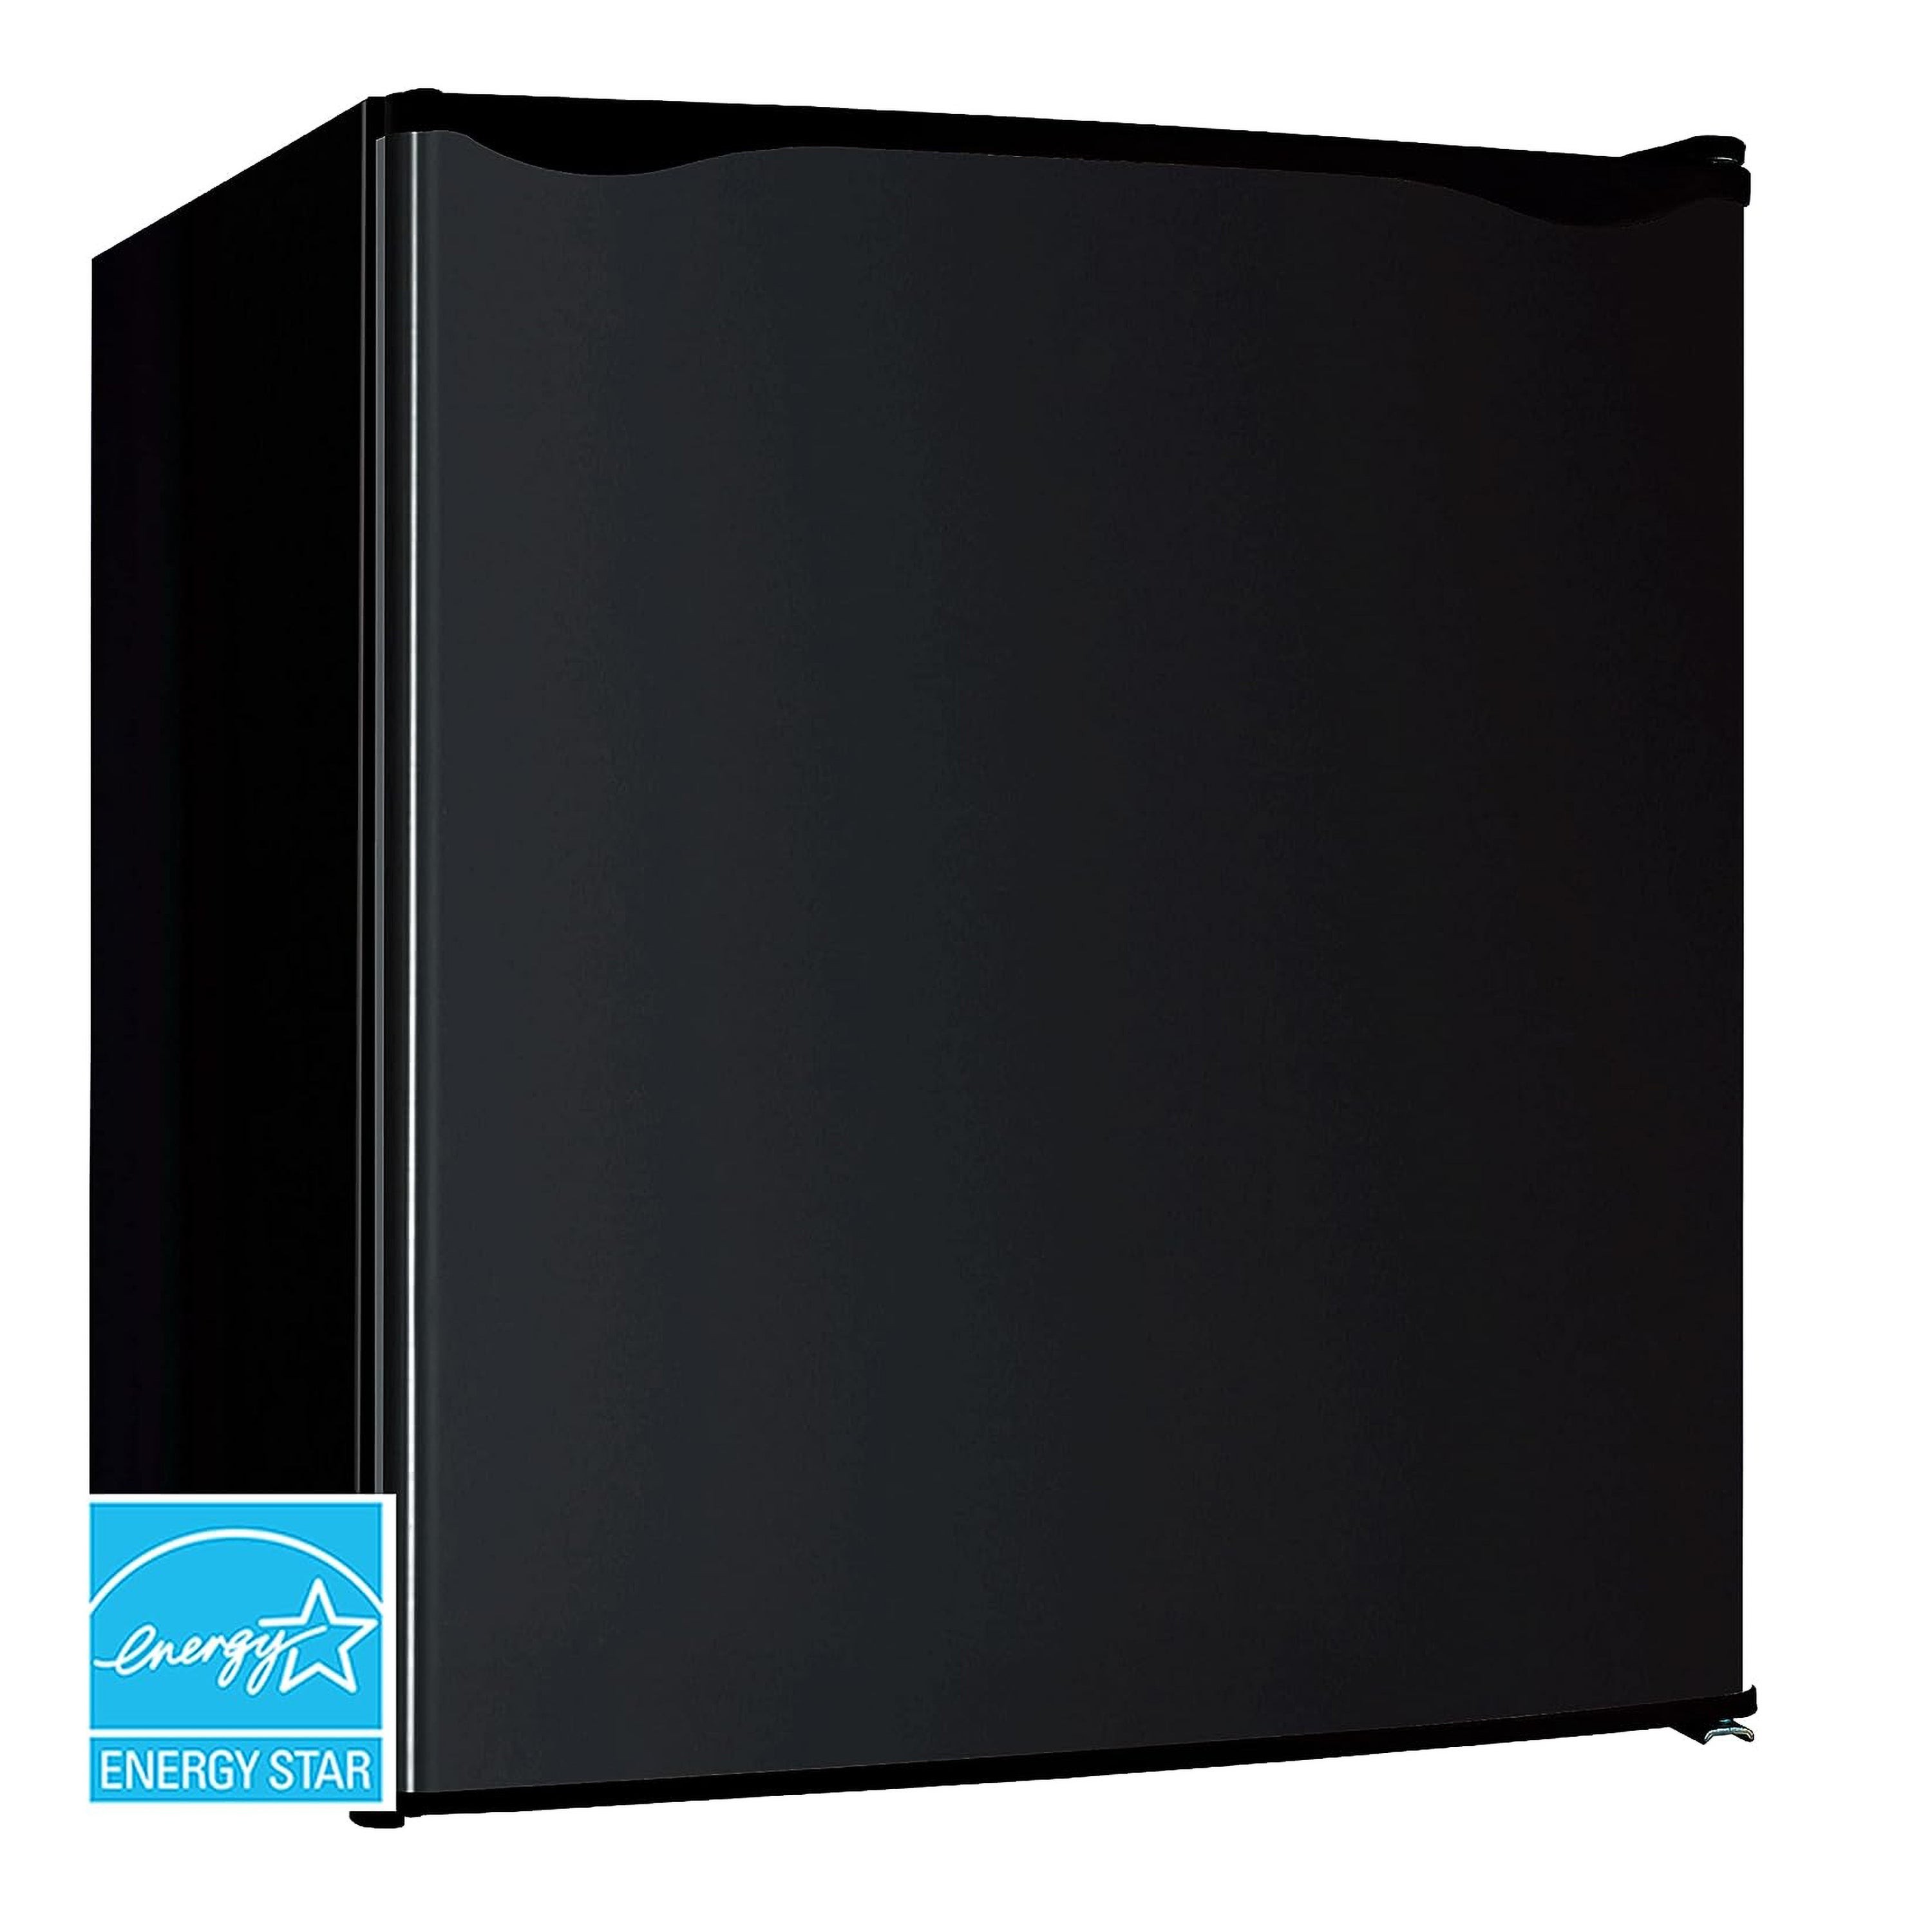 1.6 Cubic Foot Compact Refrigerator Black